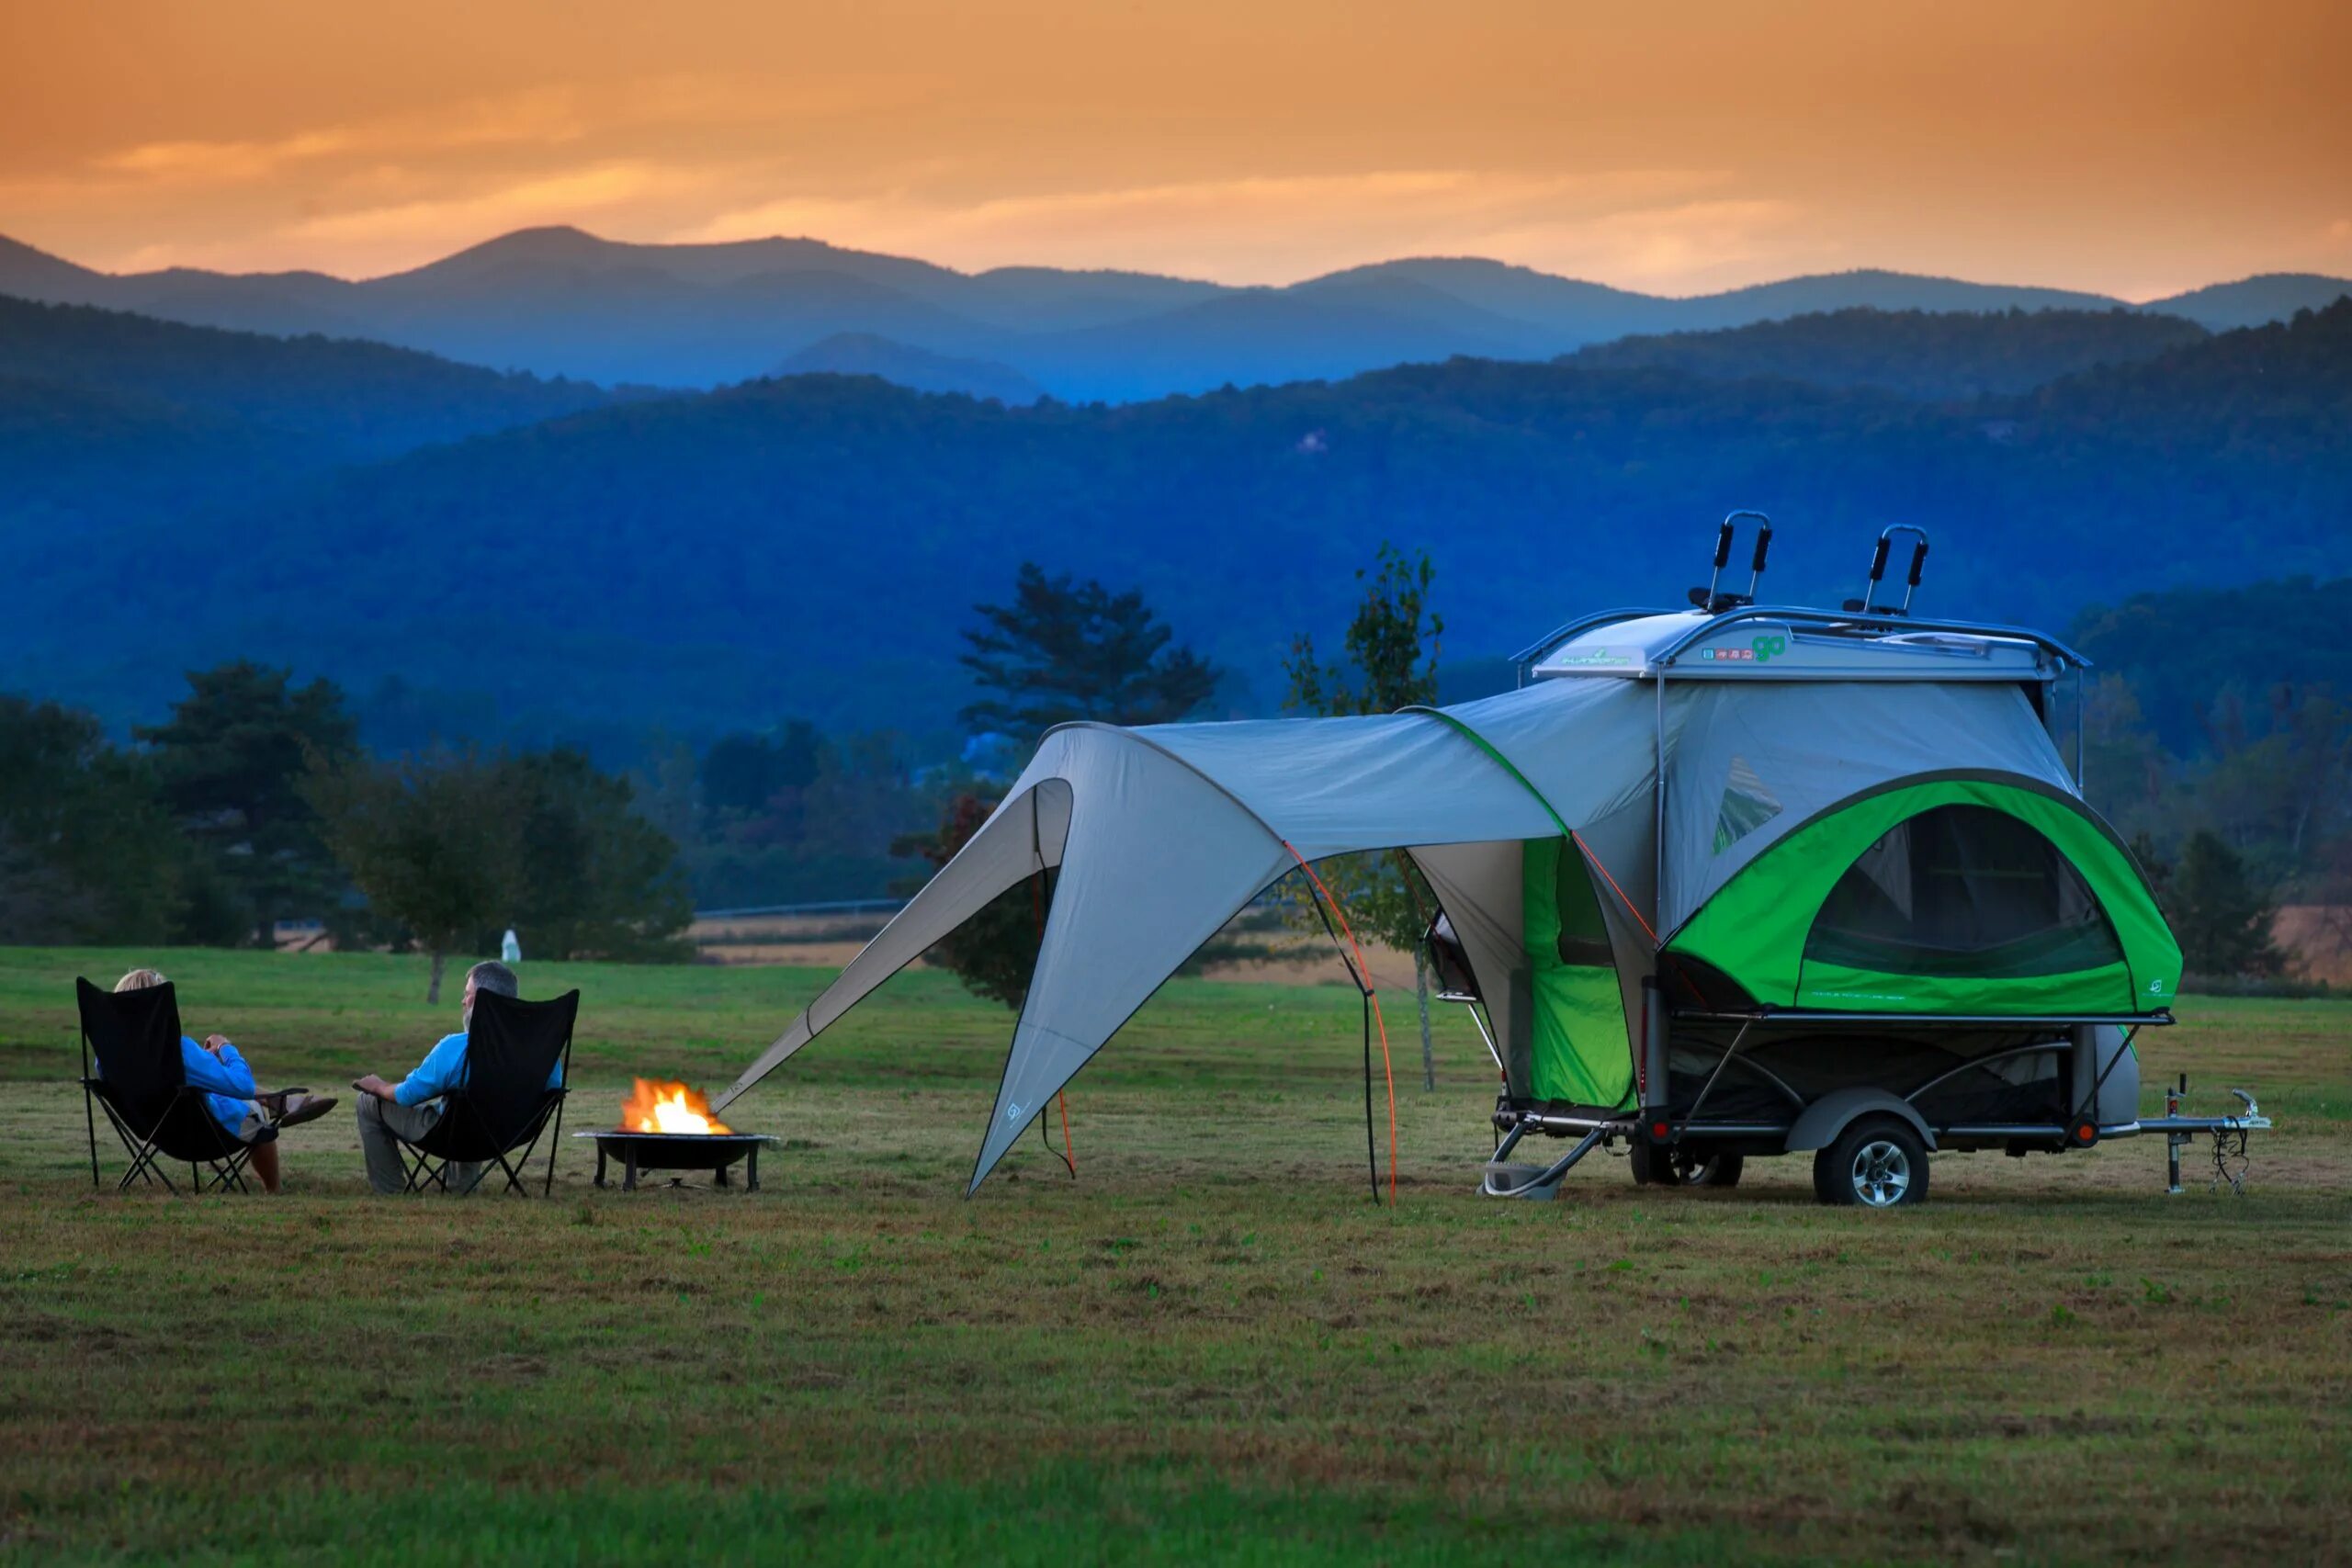 Travel camping. Палатка адвенчер. Кепинг. Кемпинг. Путешествие с палаткой.